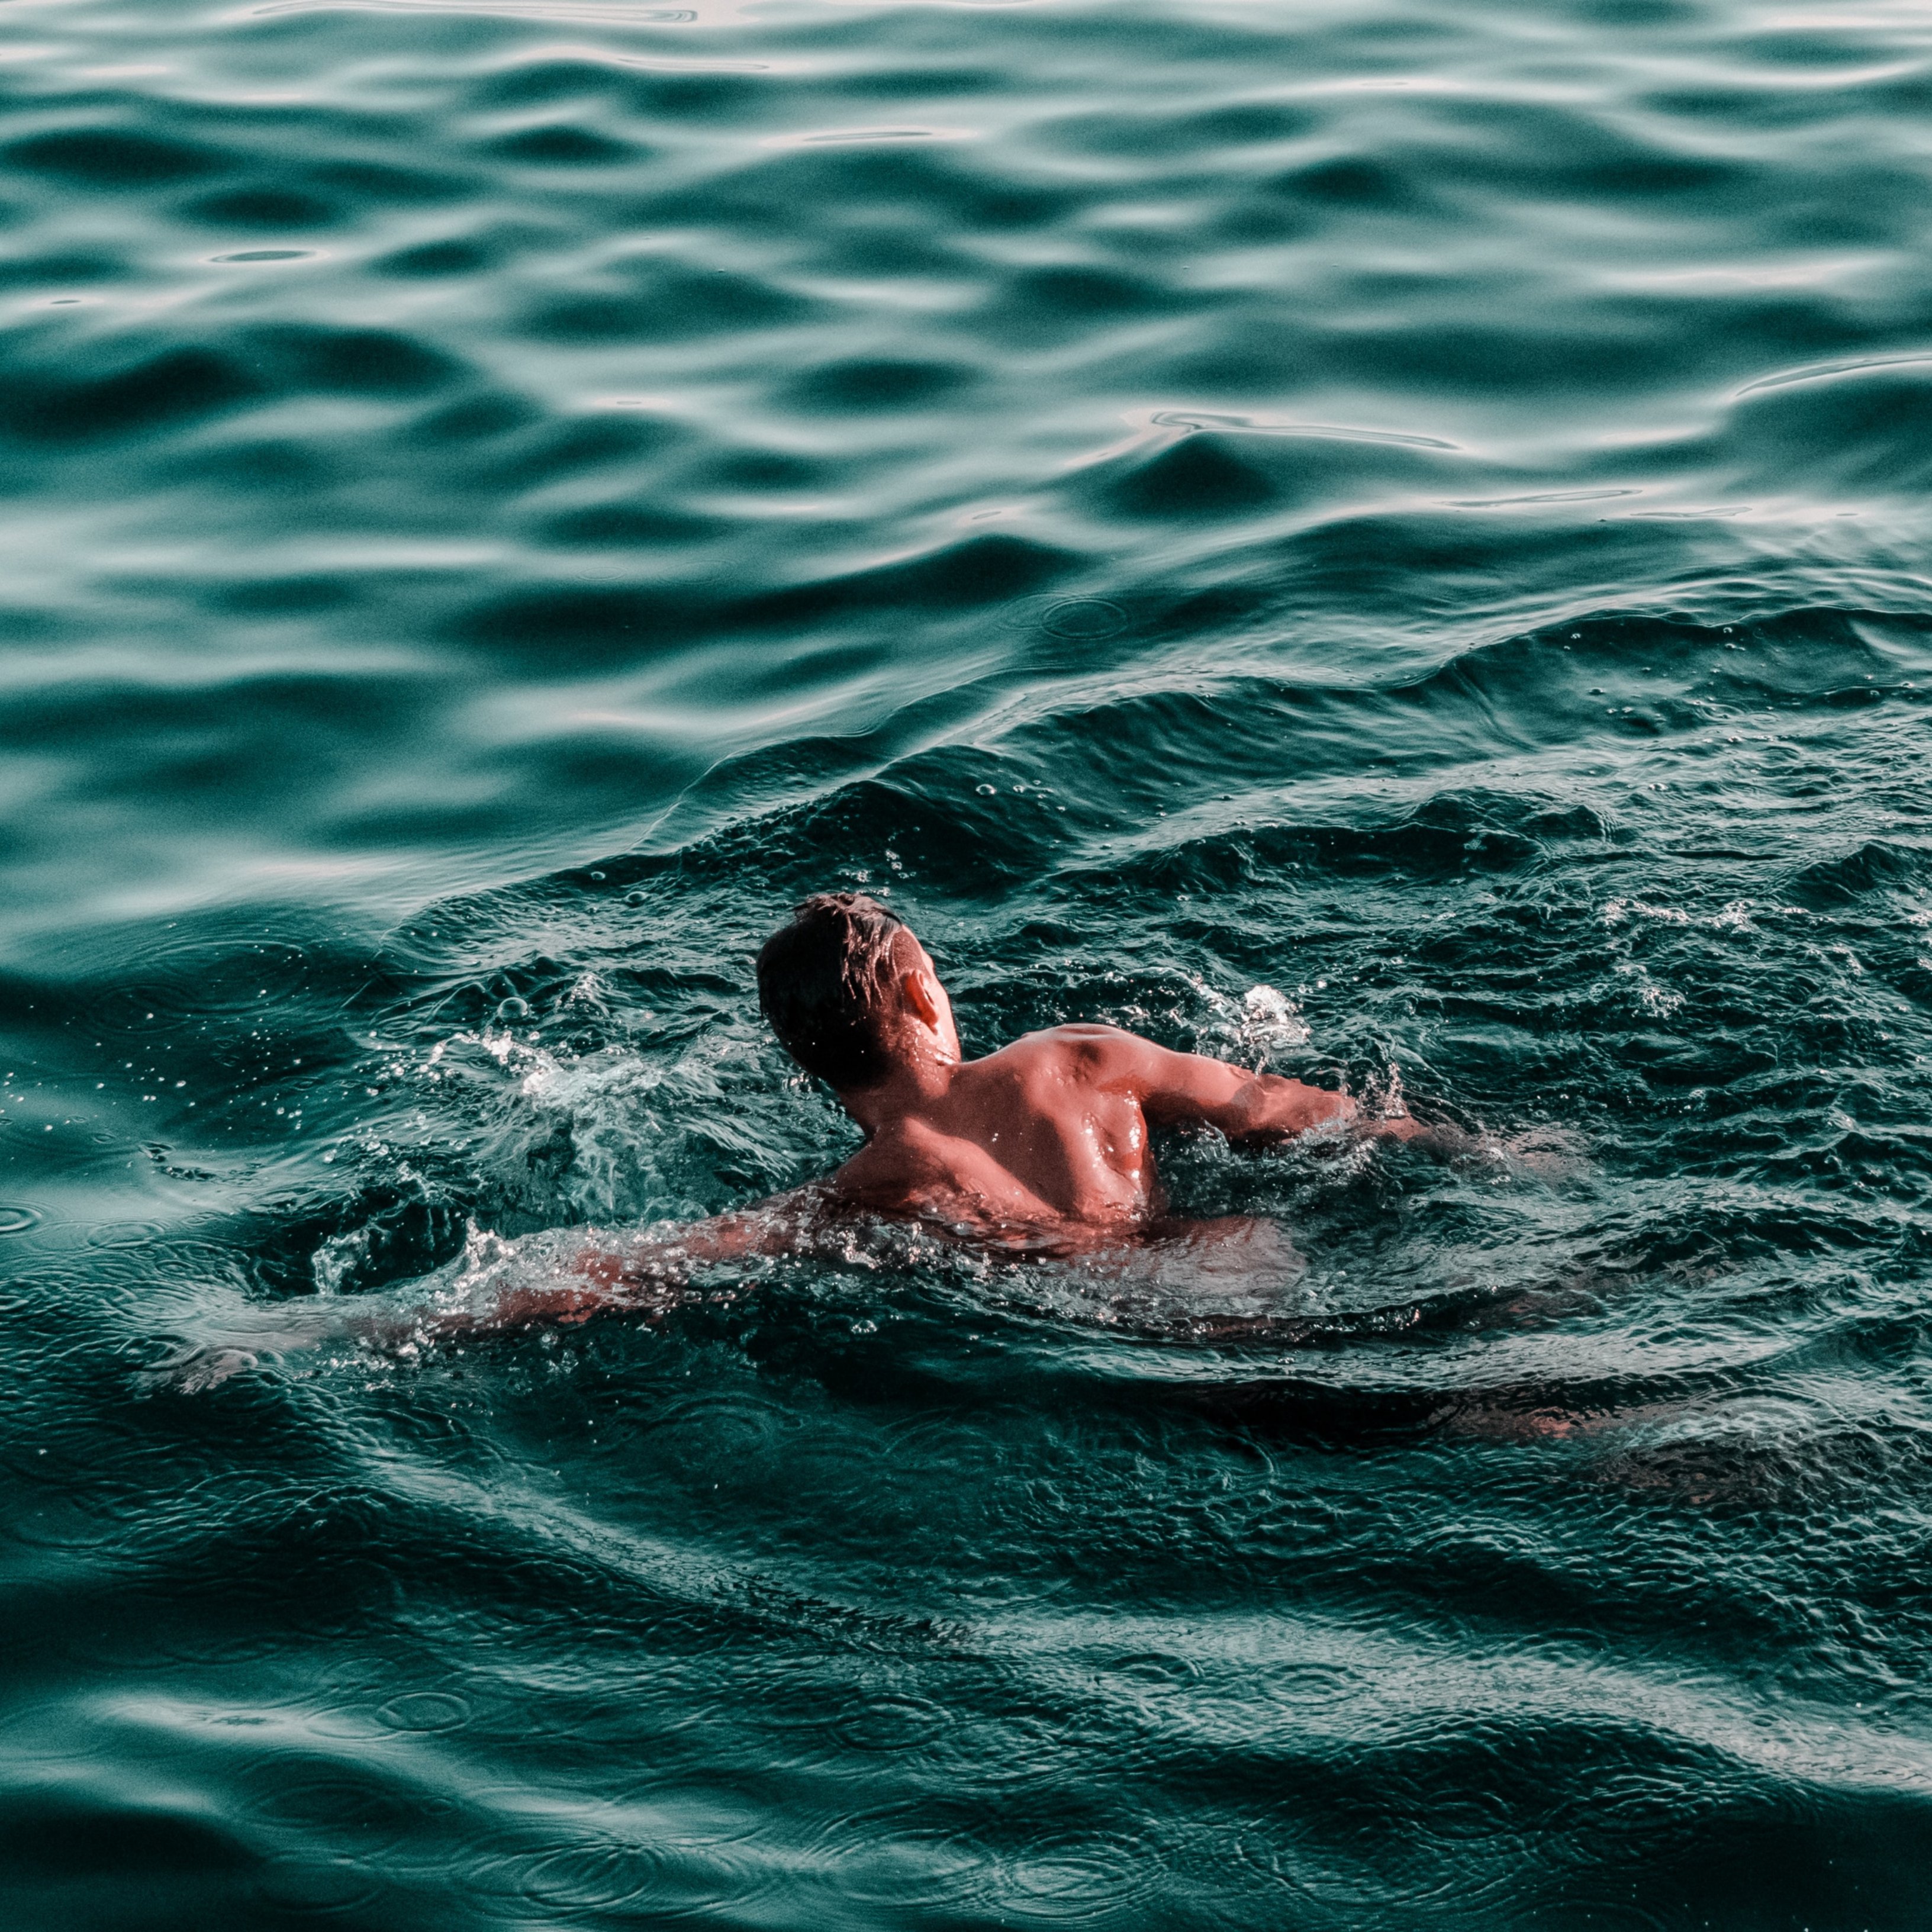 Sis consells a tenir en compte si nedes al mar